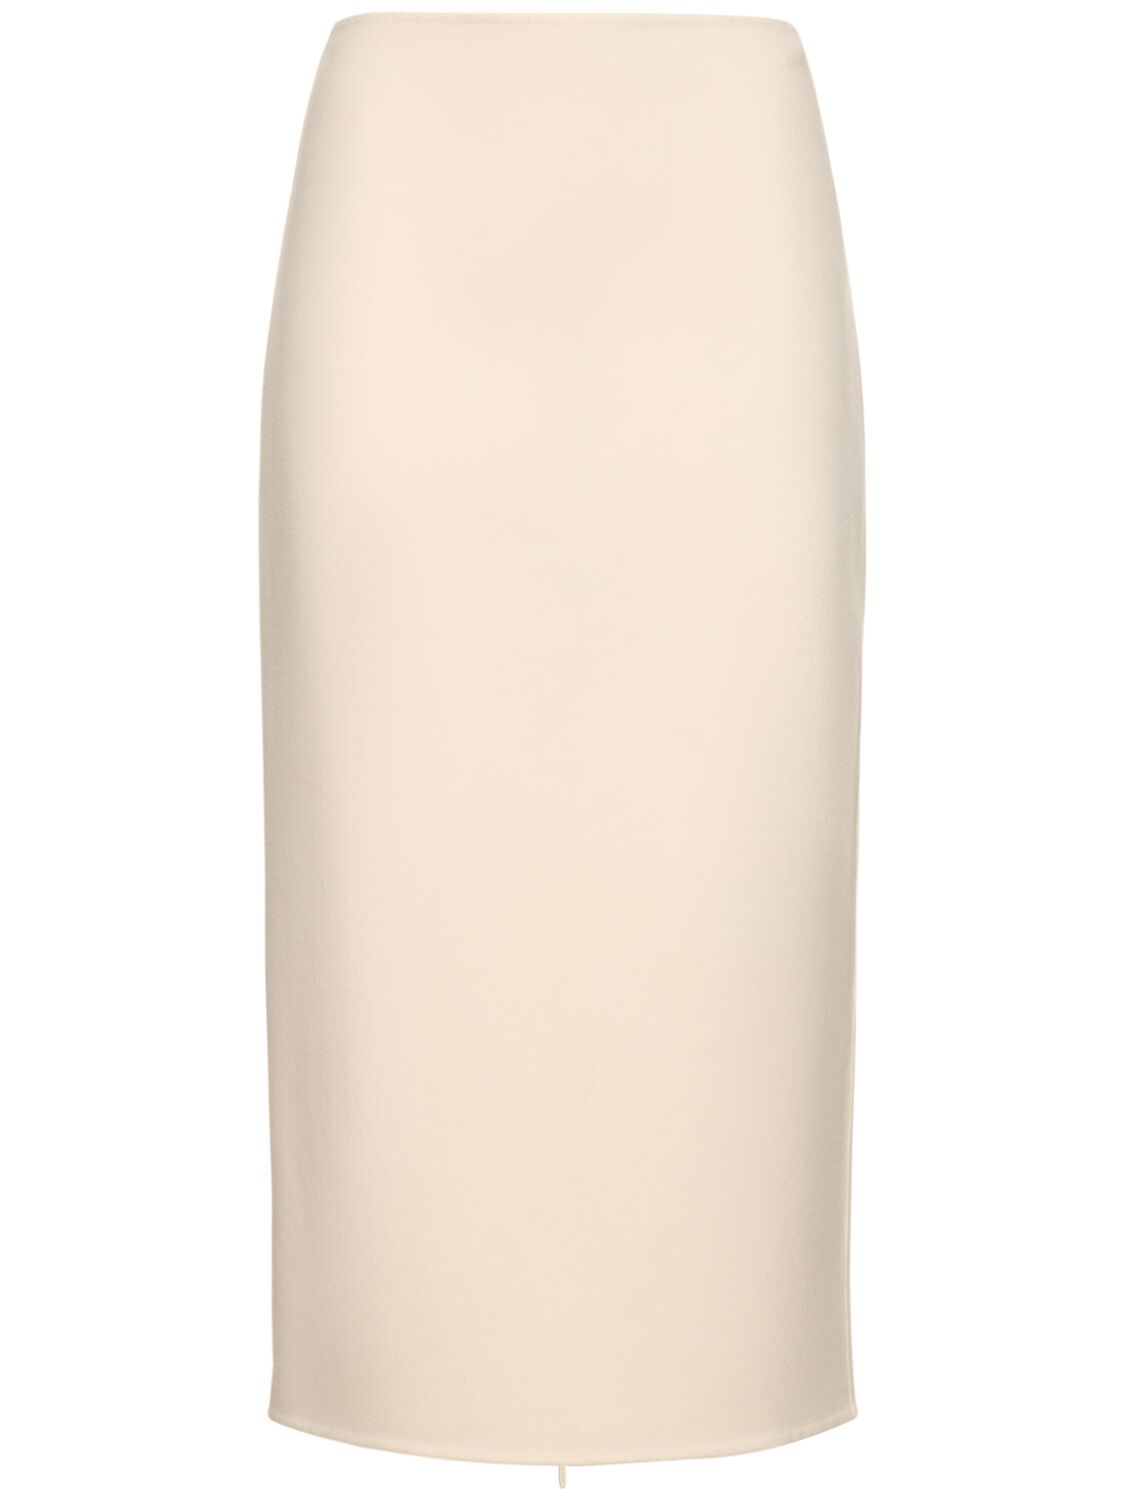 Image of Bartellette Brushed Cashmere Midi Skirt